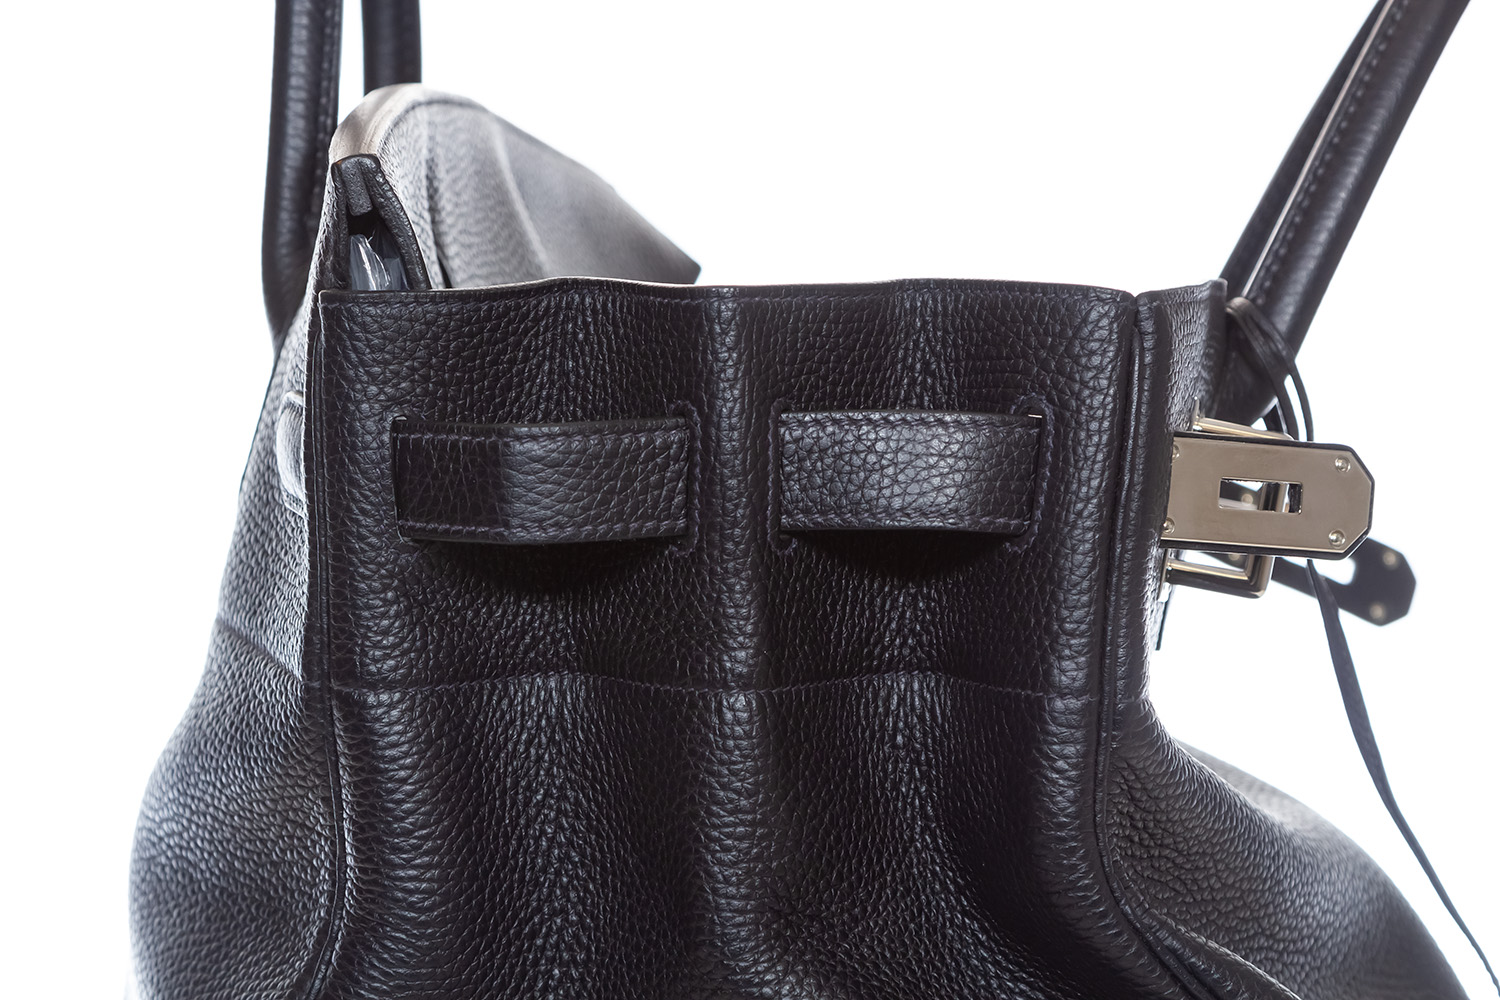 Hermès Birkin Handbag 395268, HealthdesignShops